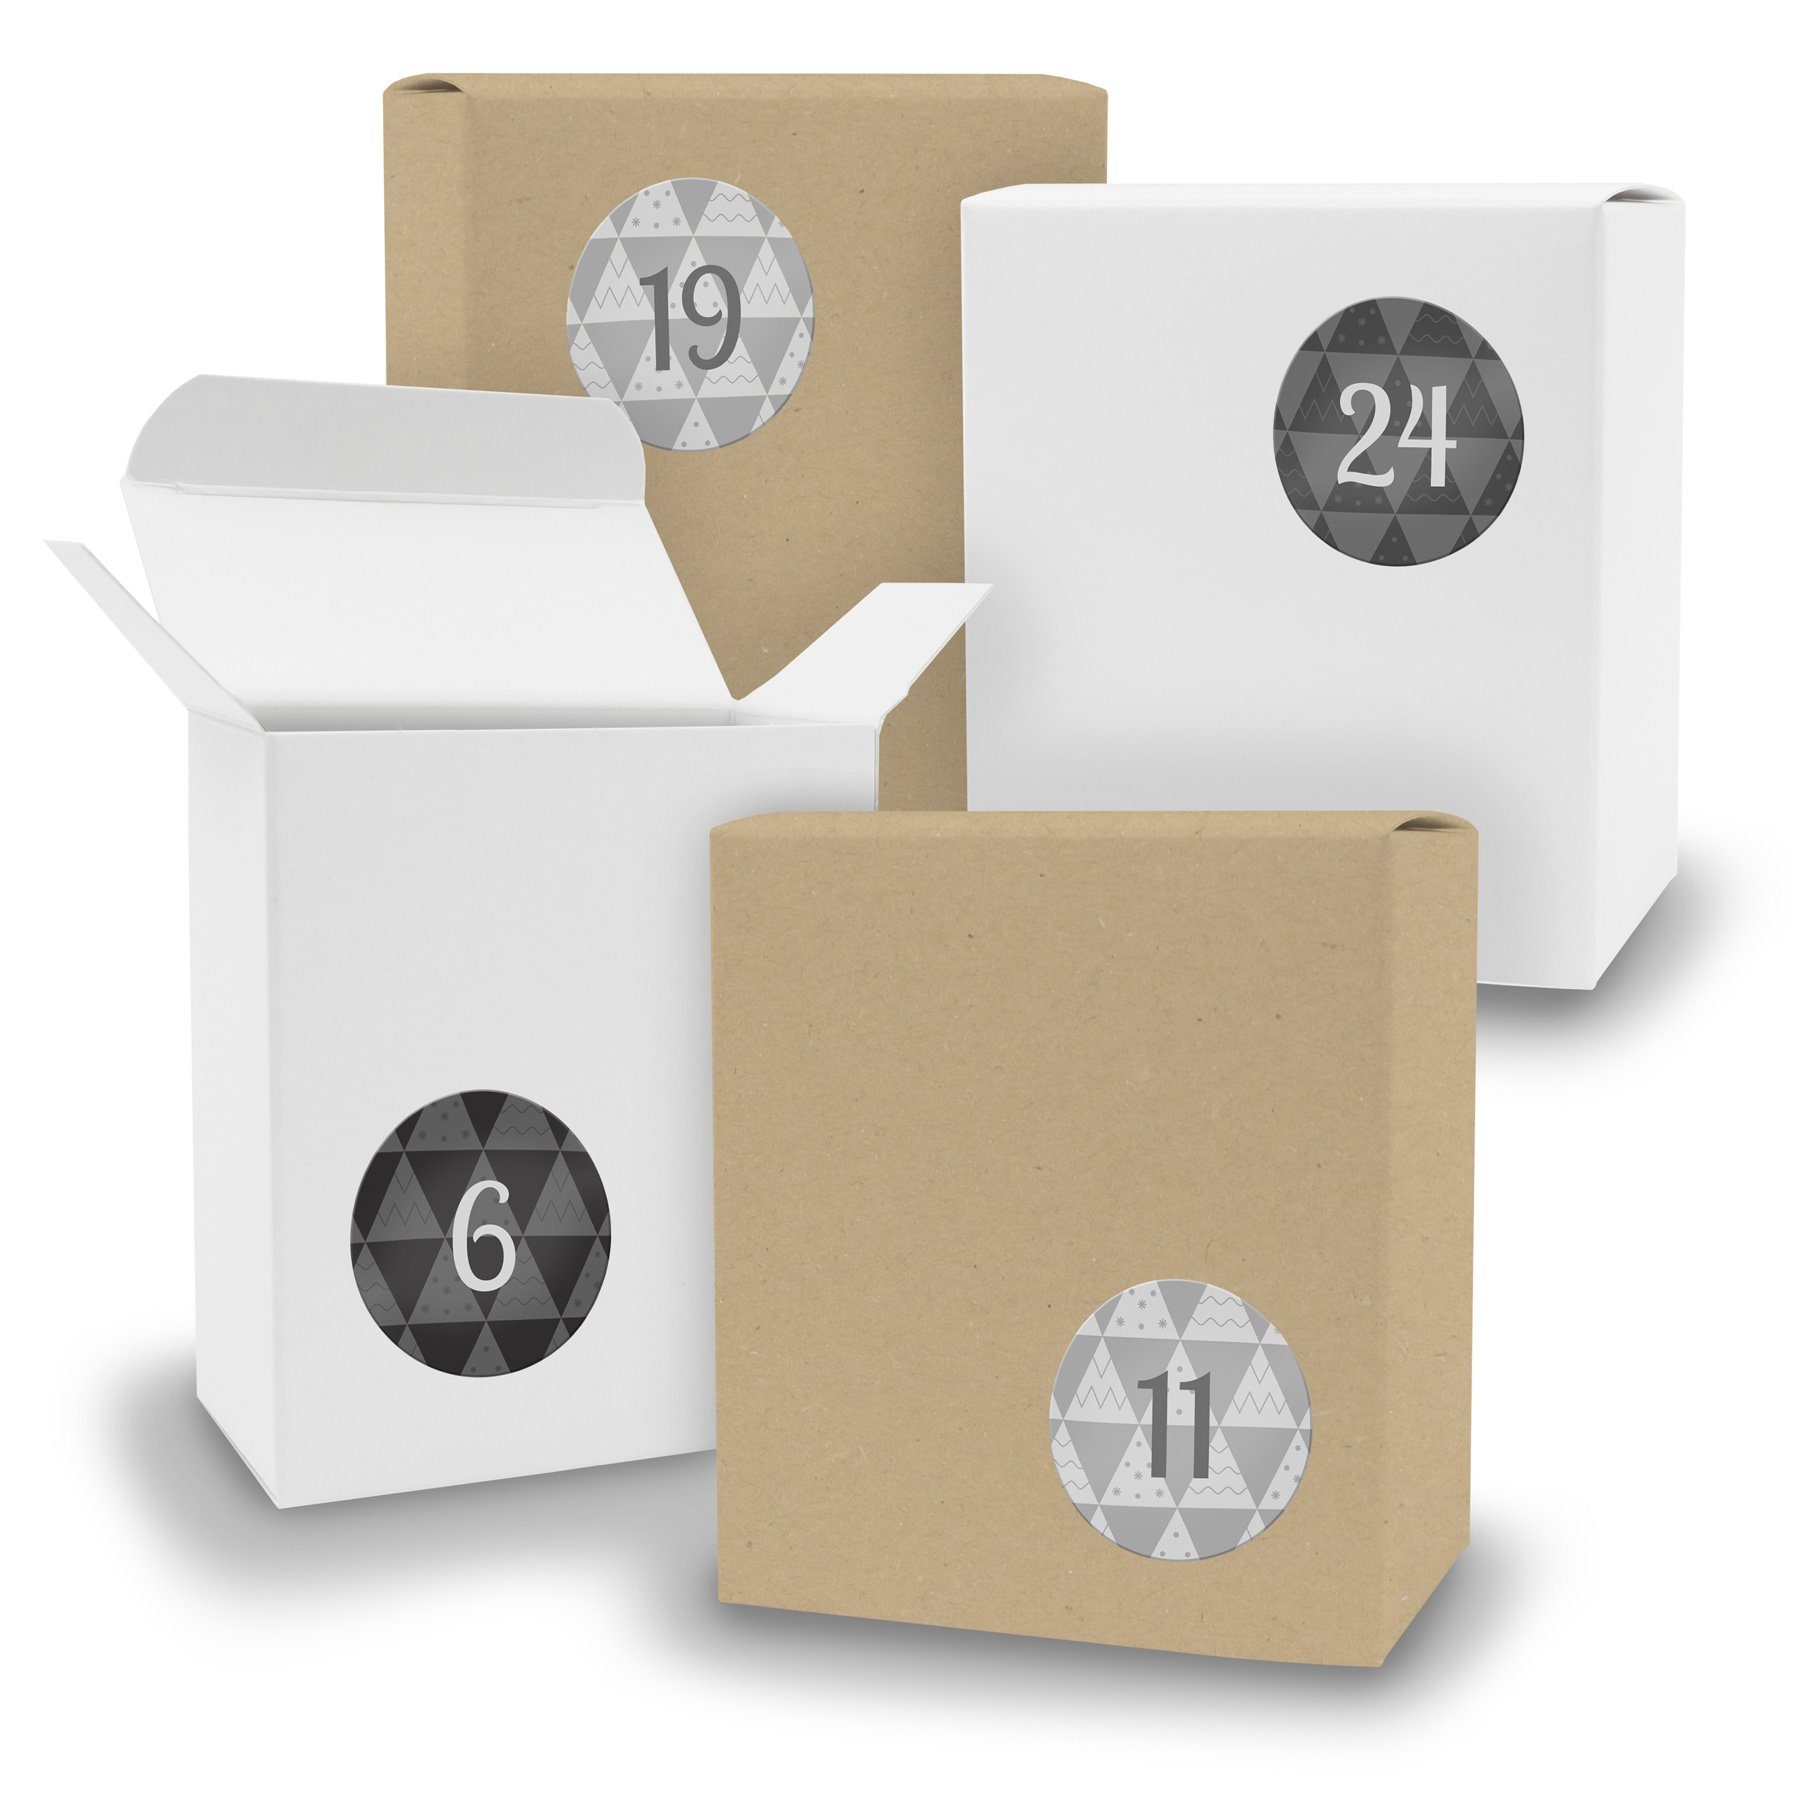 itenga befüllbarer Adventskalender Adventskalender zum Füllen 24x Quader gemischt WEISS BRAUN + Sticker V | Adventskalender zum Befüllen